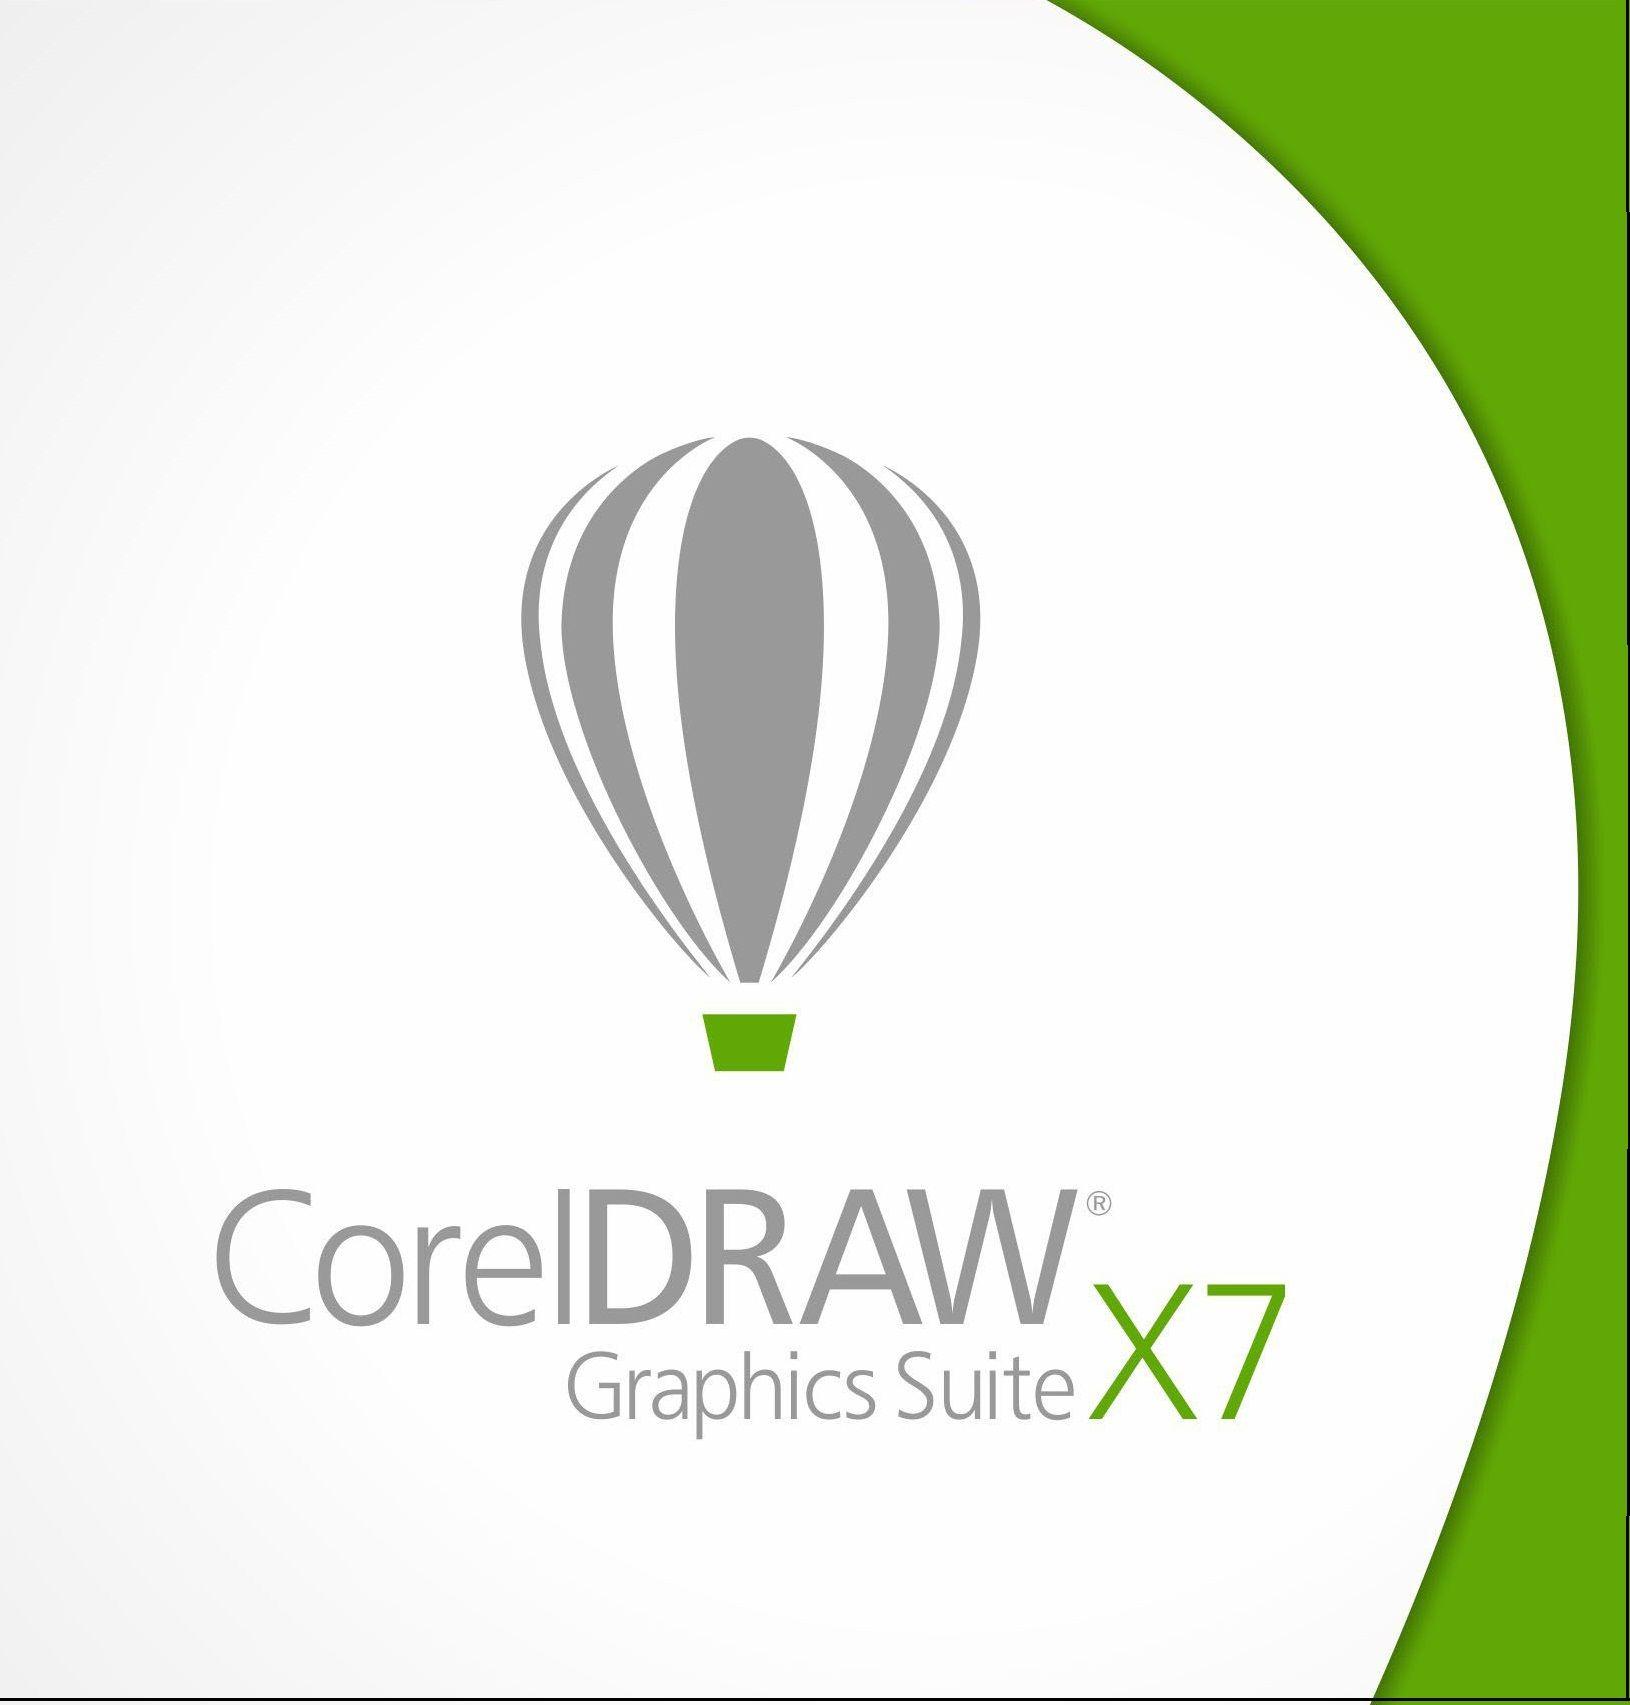 X7 Logo - CorelDraw Graphics Suite X7 Free Download